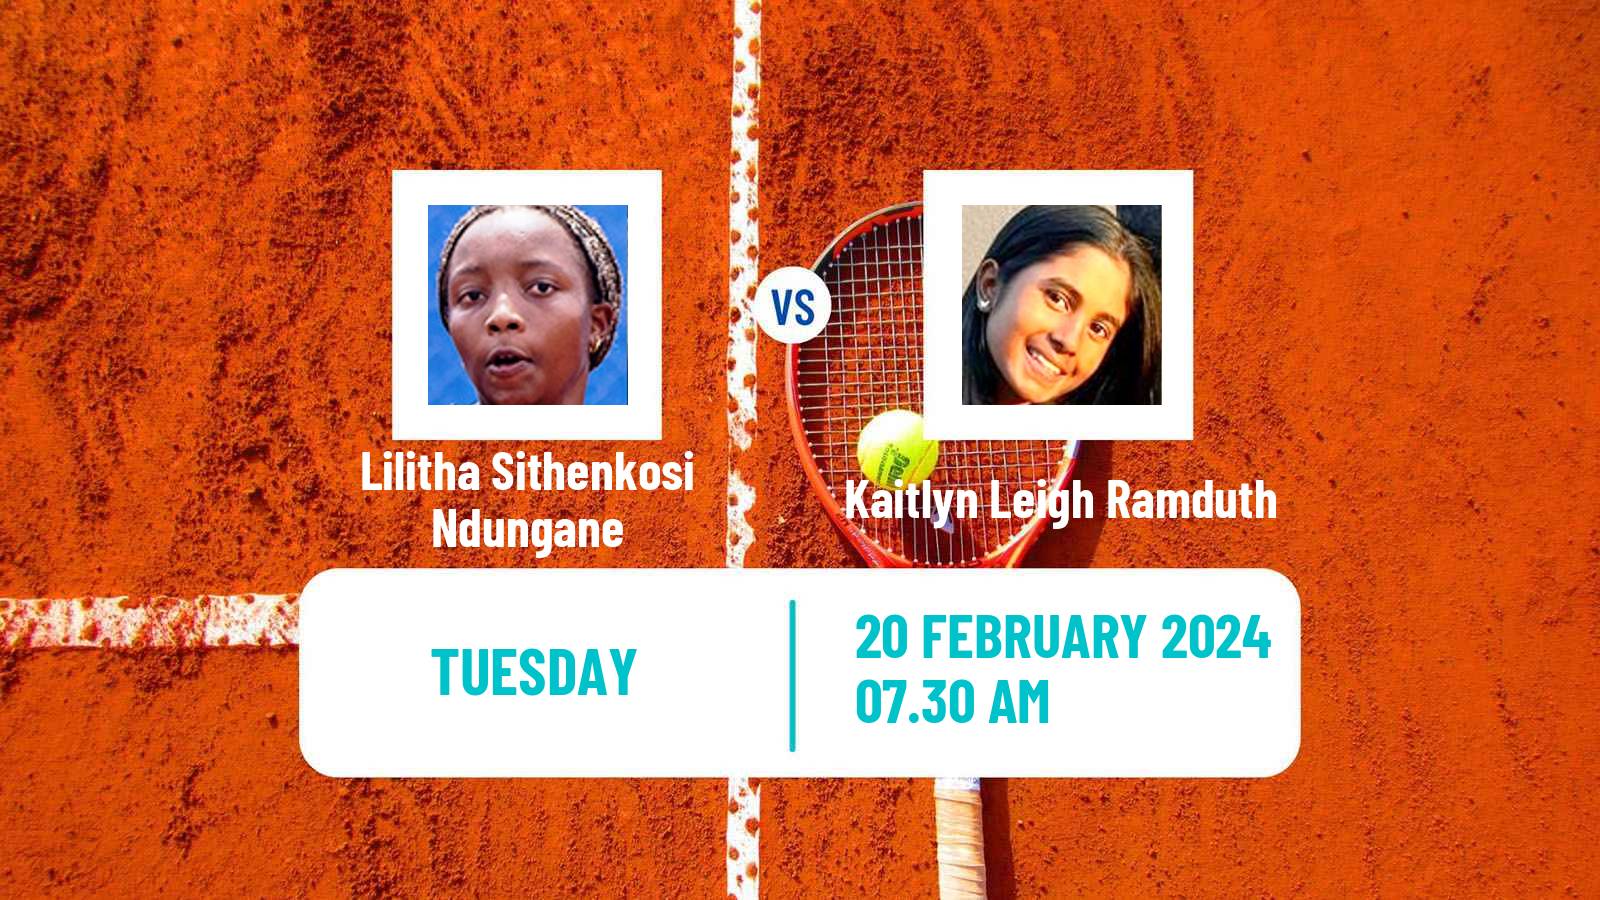 Tennis ITF W50 Pretoria Women Lilitha Sithenkosi Ndungane - Kaitlyn Leigh Ramduth